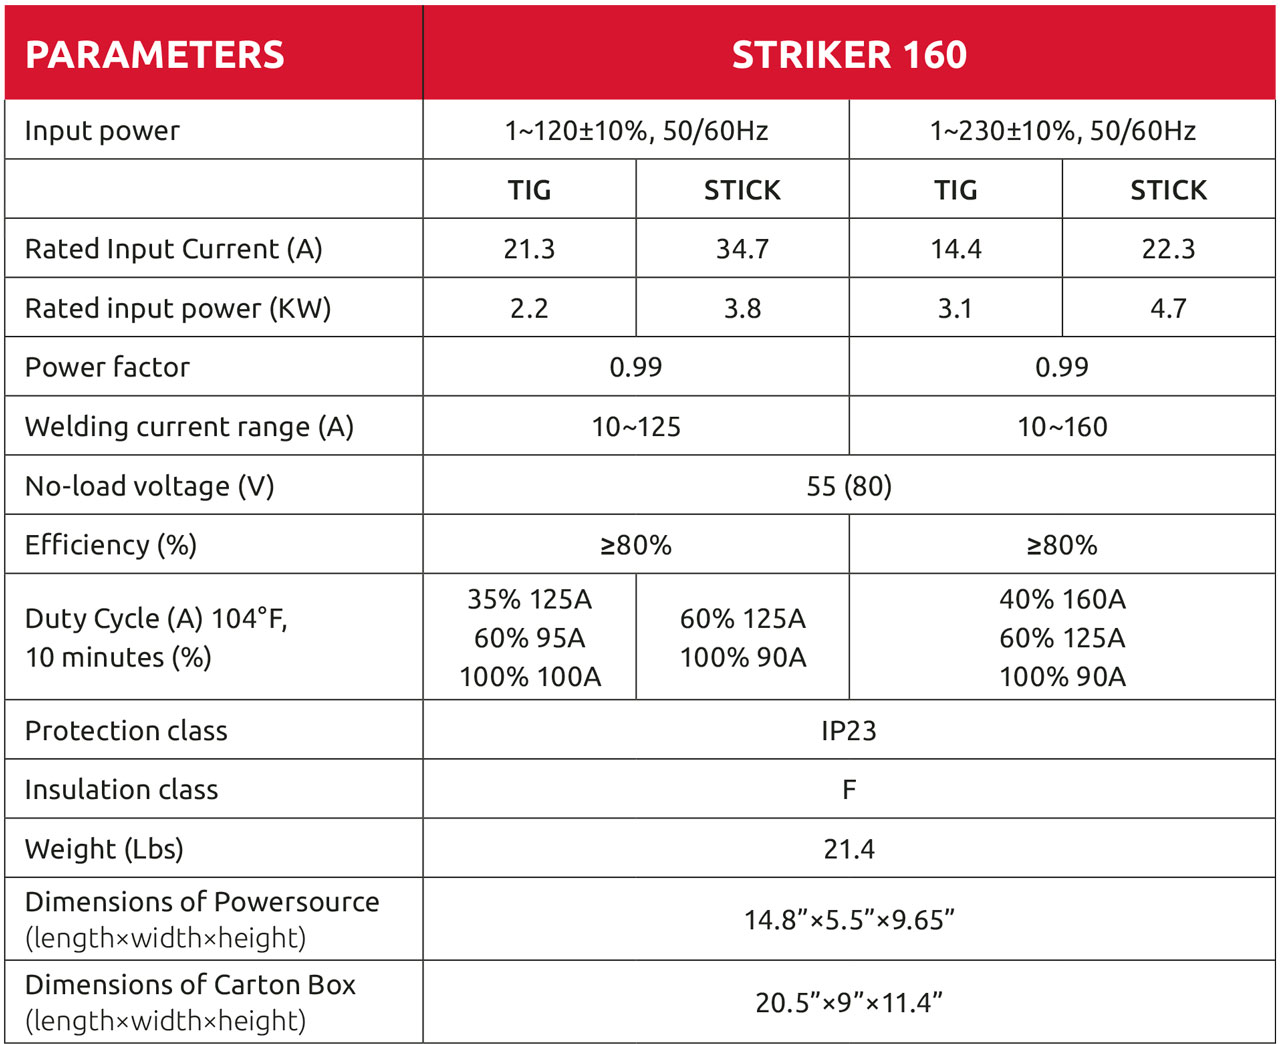 11136-Striker-160-Chart 